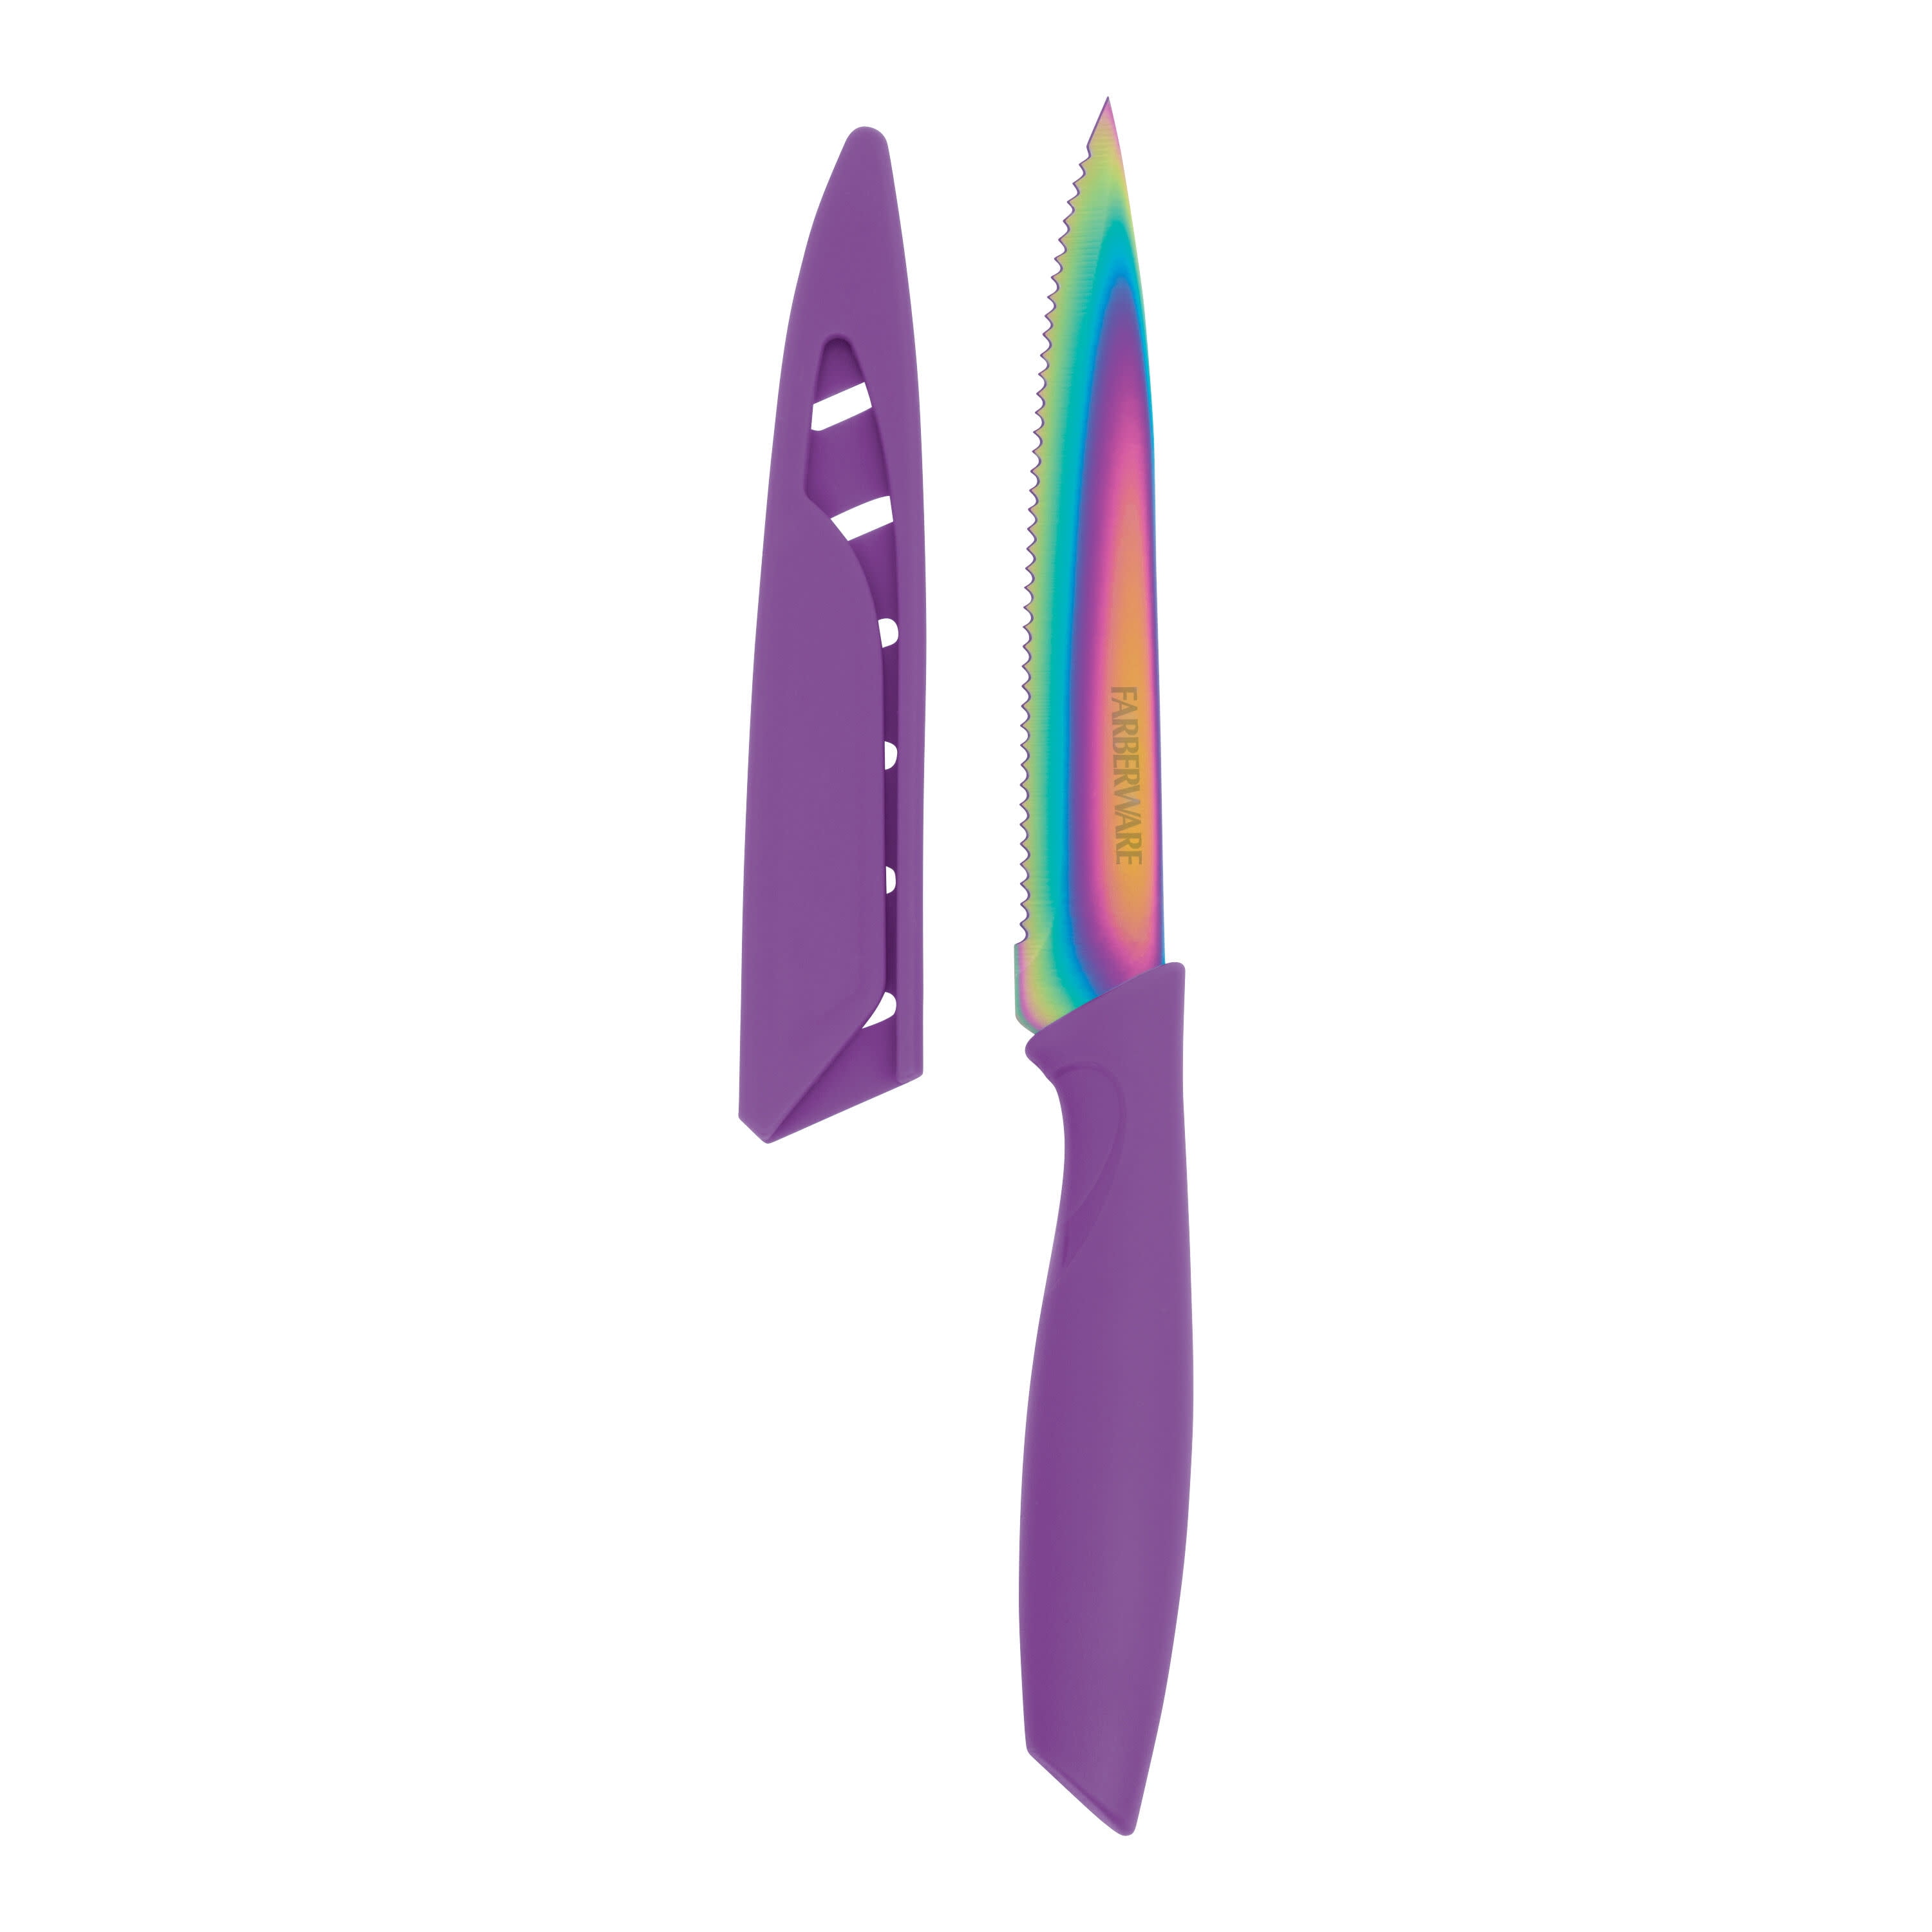 Farberware 3-piece Chef Set with Rainbow Titanium Blade, Navy